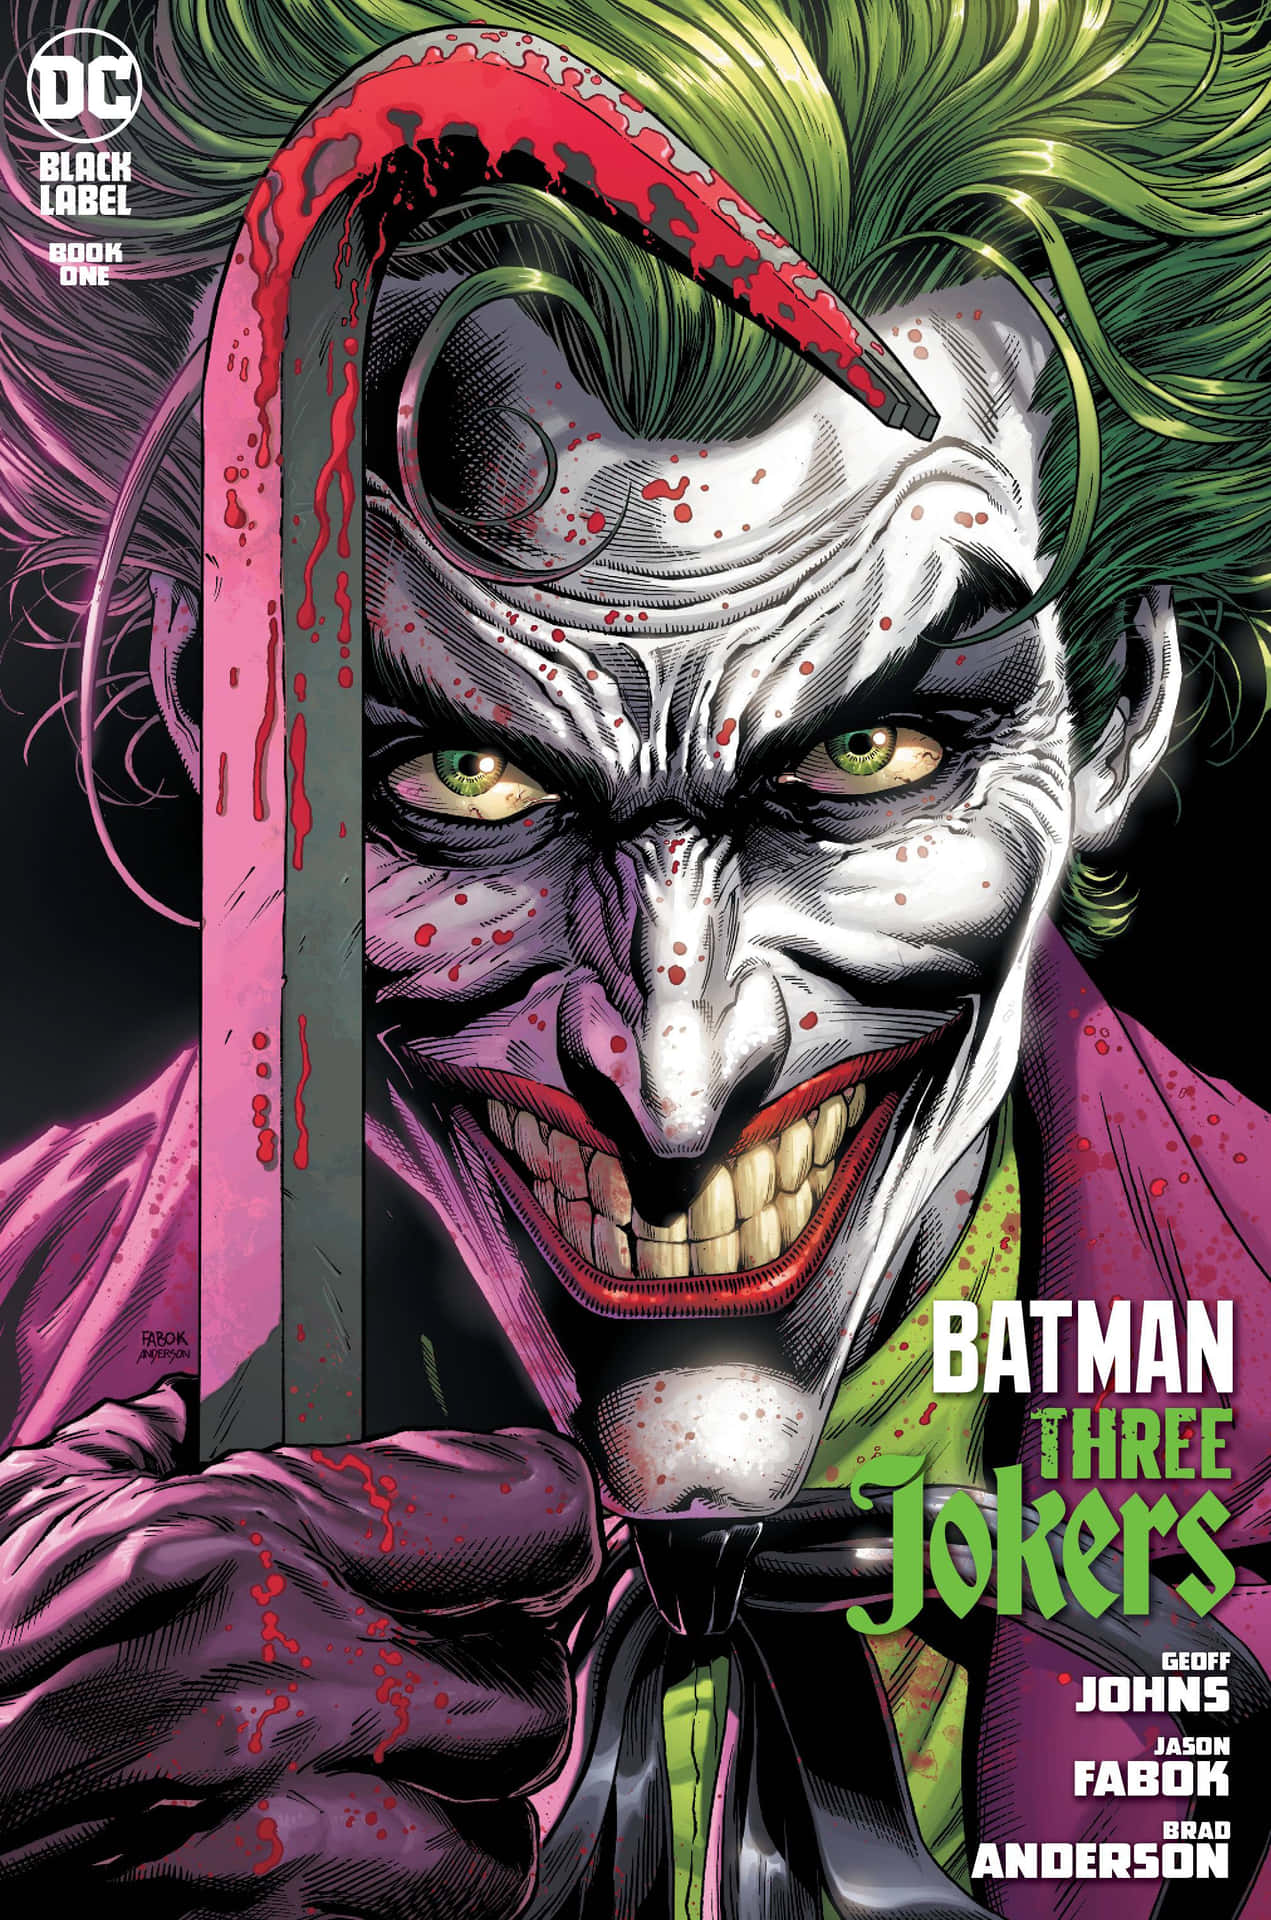 The iconic Joker